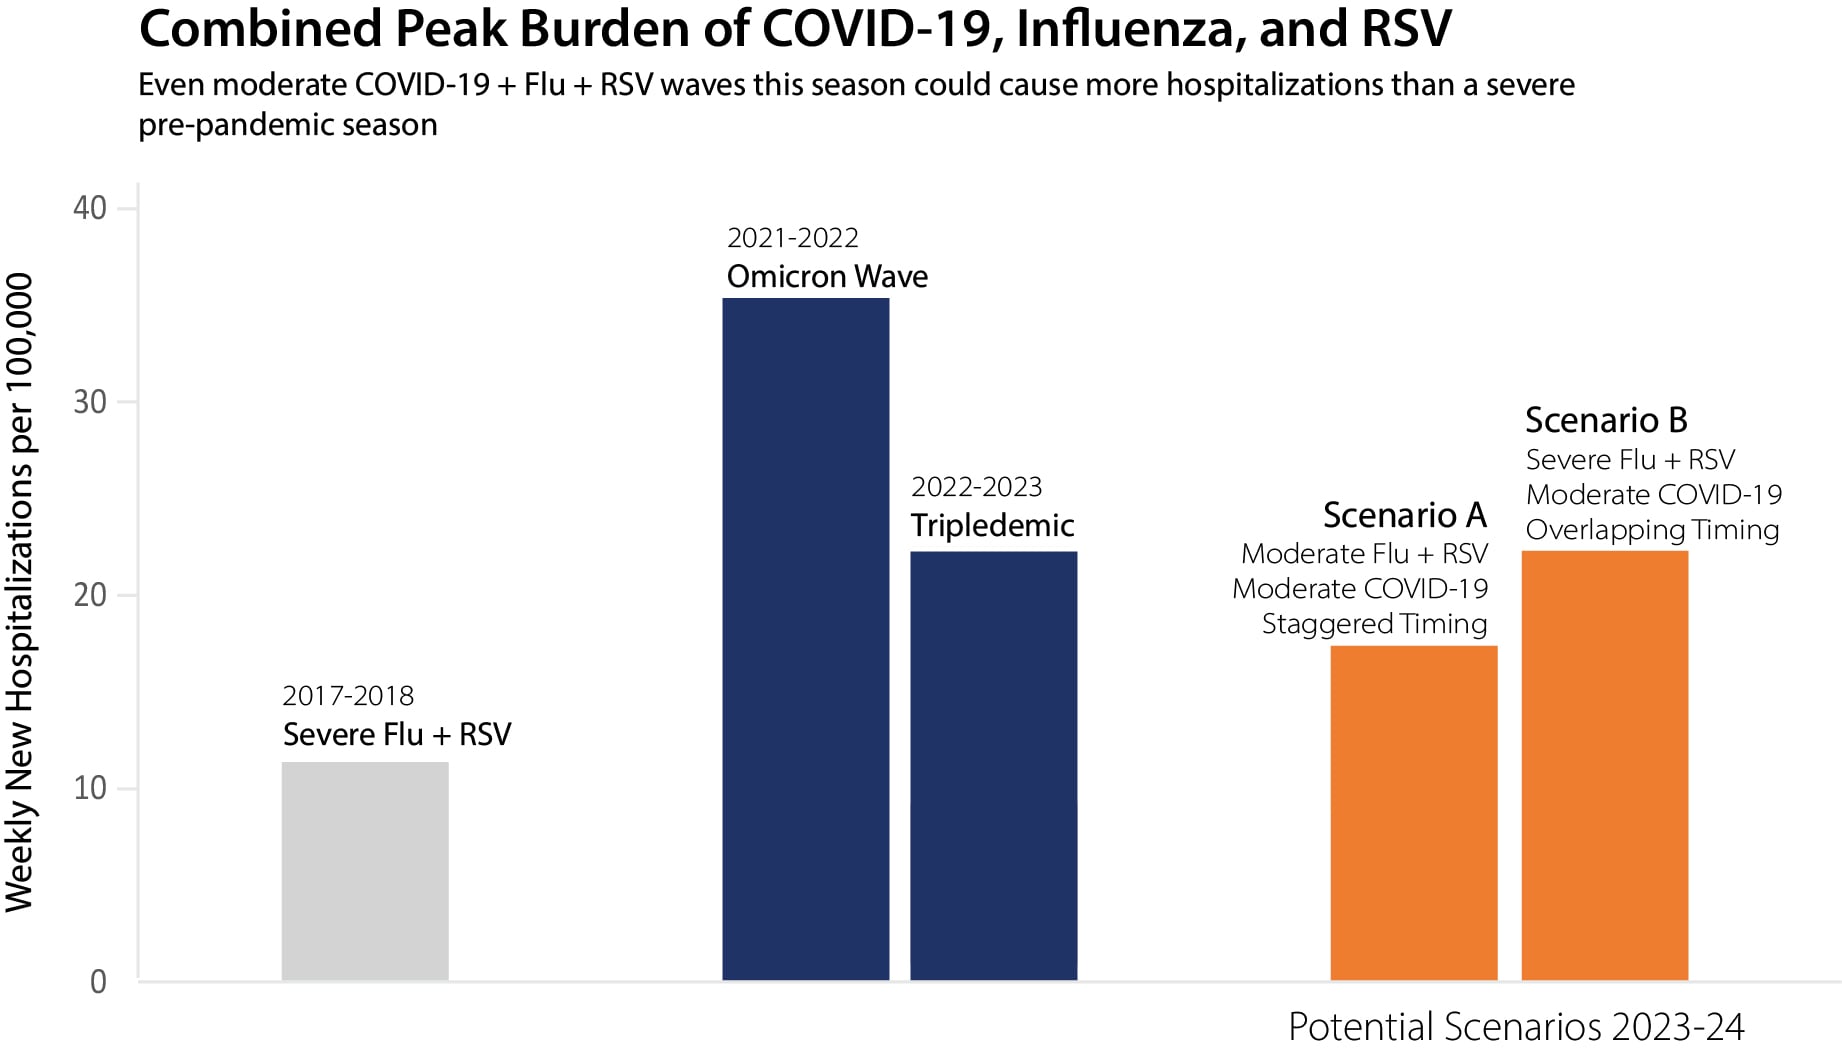 Figure 1: Combined peak burden of COVID-19, Influenza, and RSV